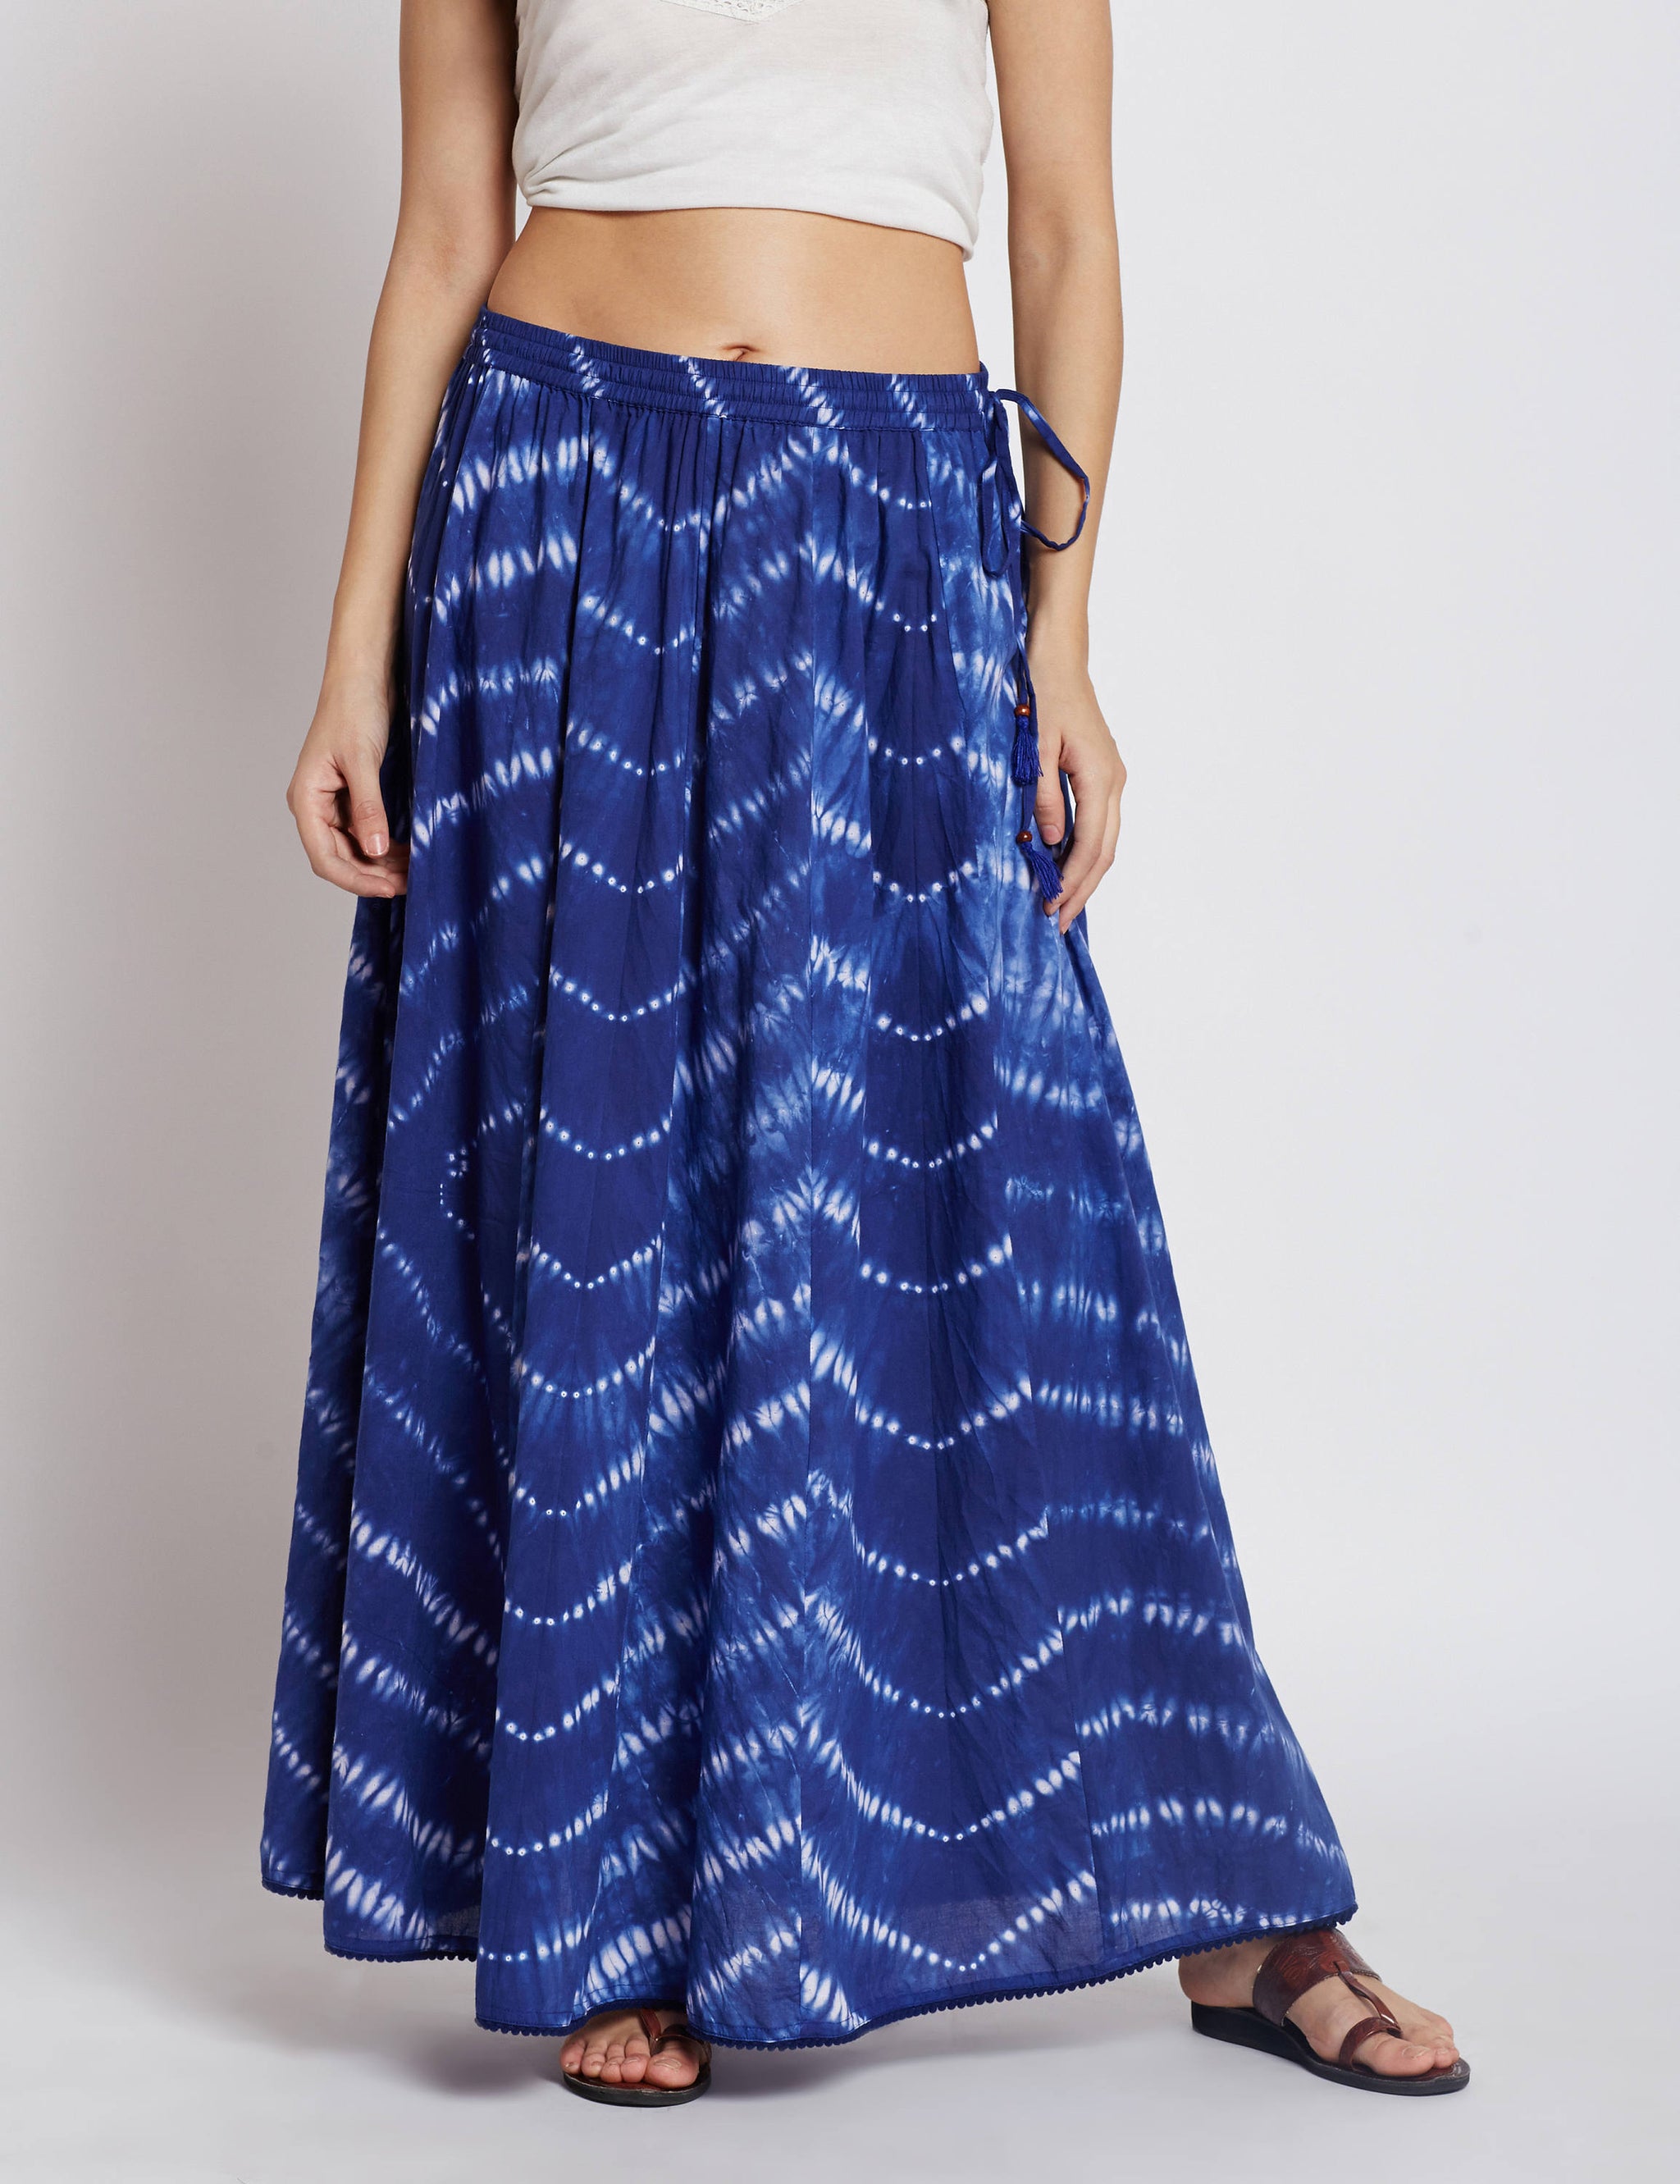 Shibori panelled long skirt in blue colour